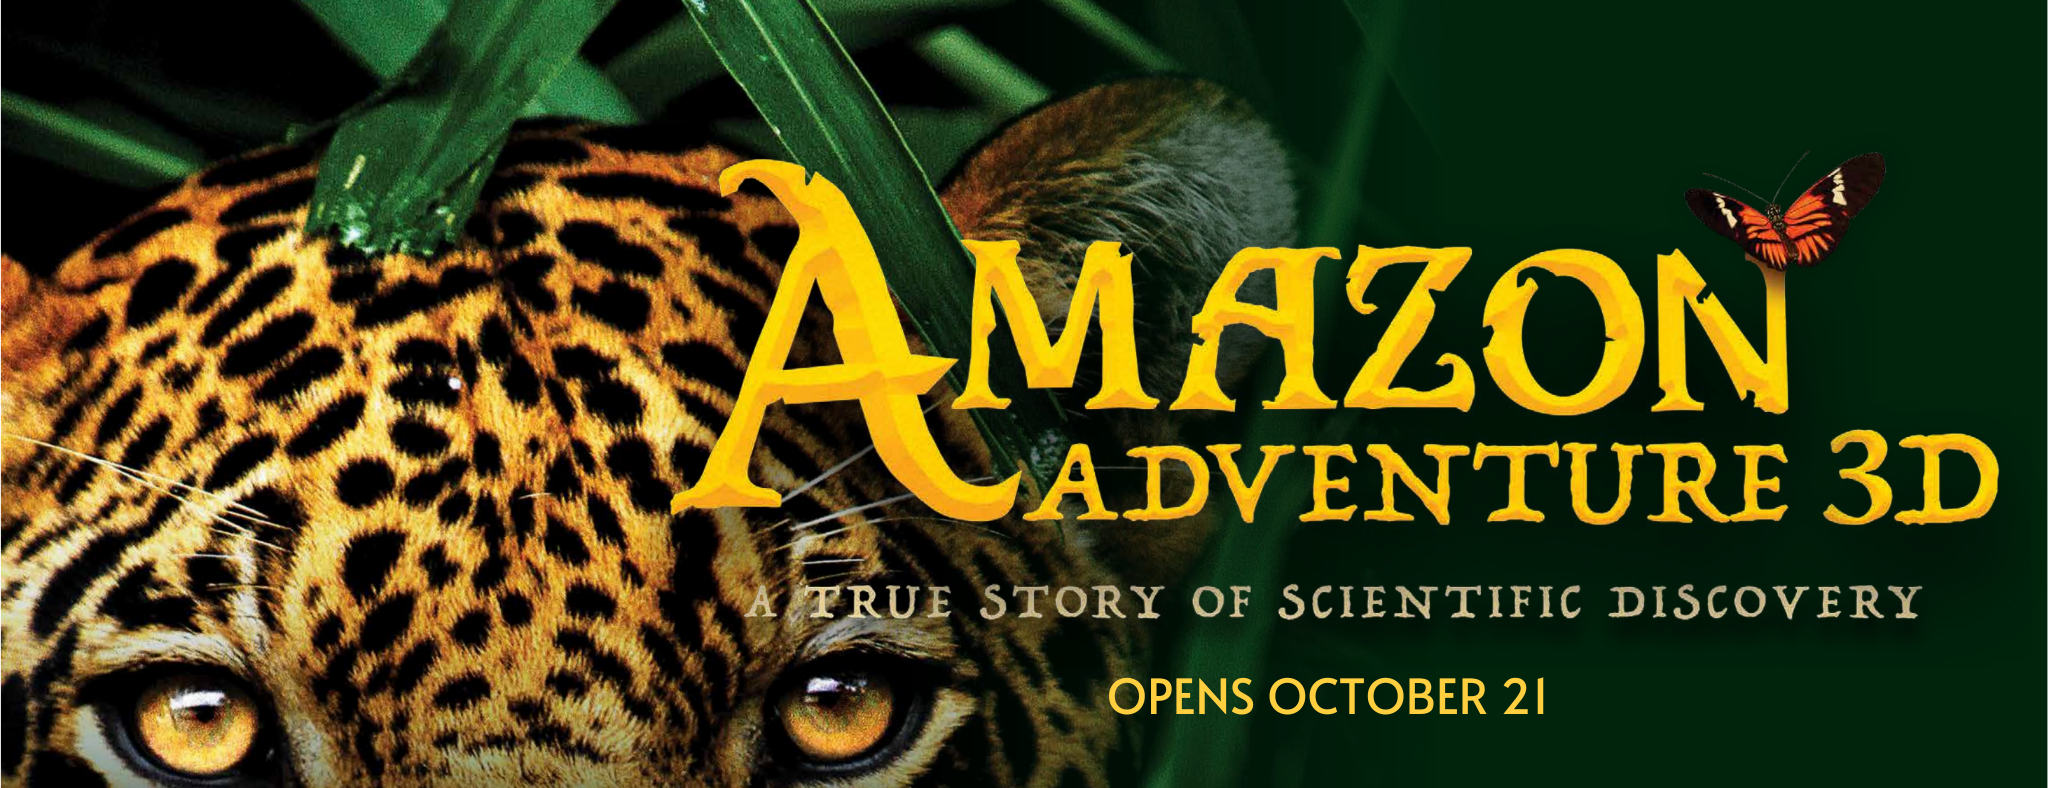 Amazon Adventure 3D logo overlay with photo of jaguar peering through rainforest brush.